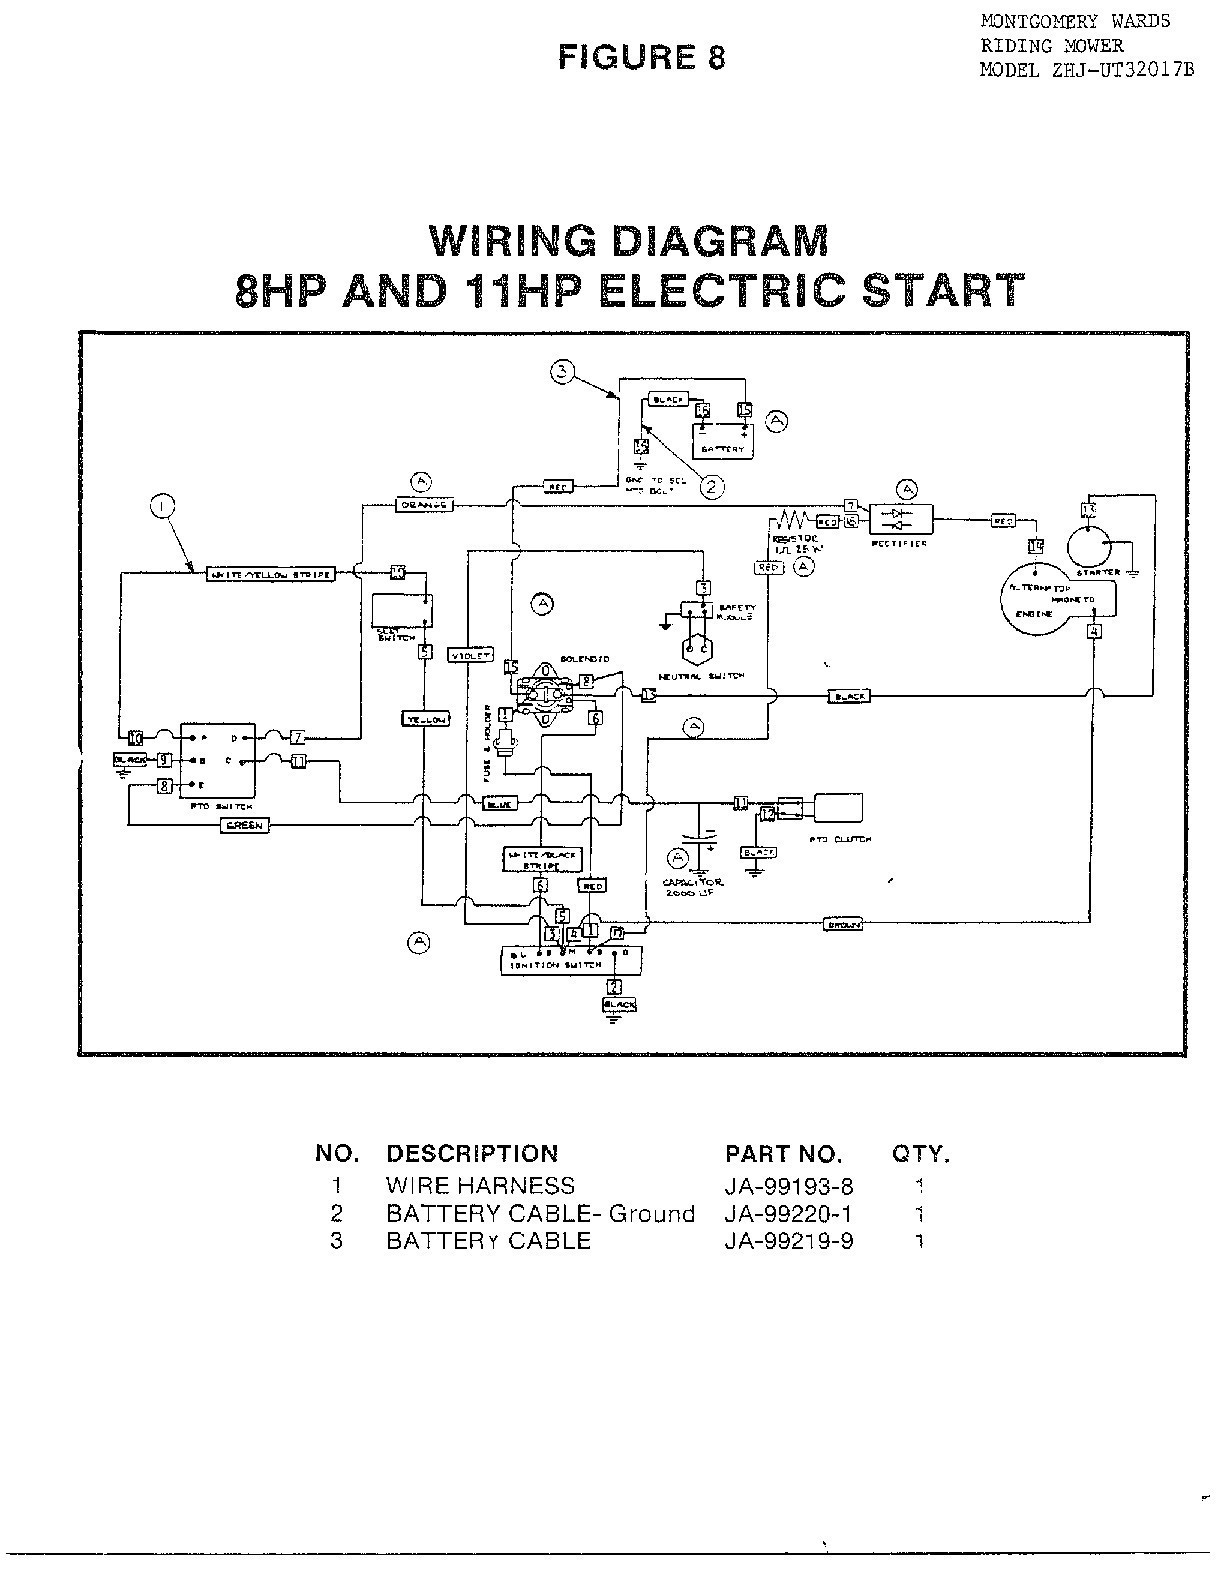 Briggs Stratton 19.5 Hp Diagram Wiring Diagram for A Briggs and Stratton 19 5 Hp Engine